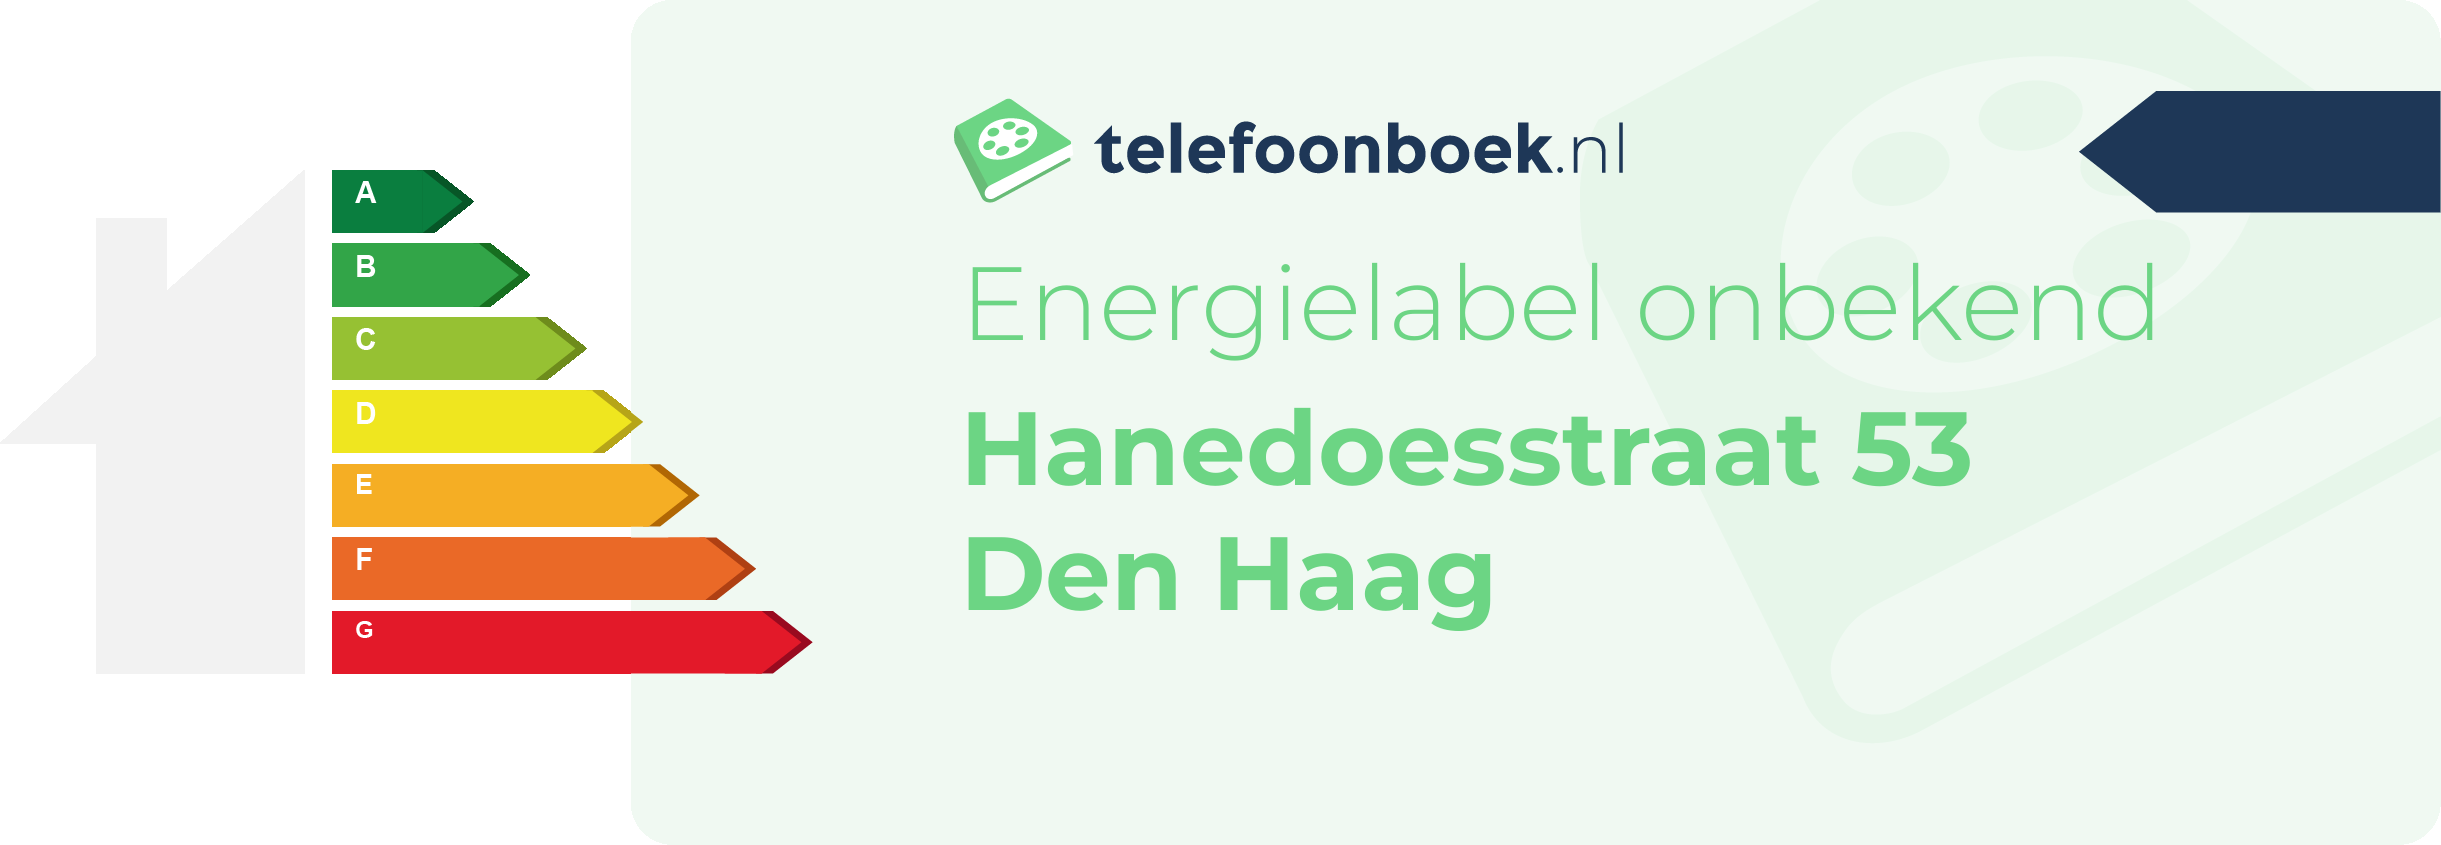 Energielabel Hanedoesstraat 53 Den Haag